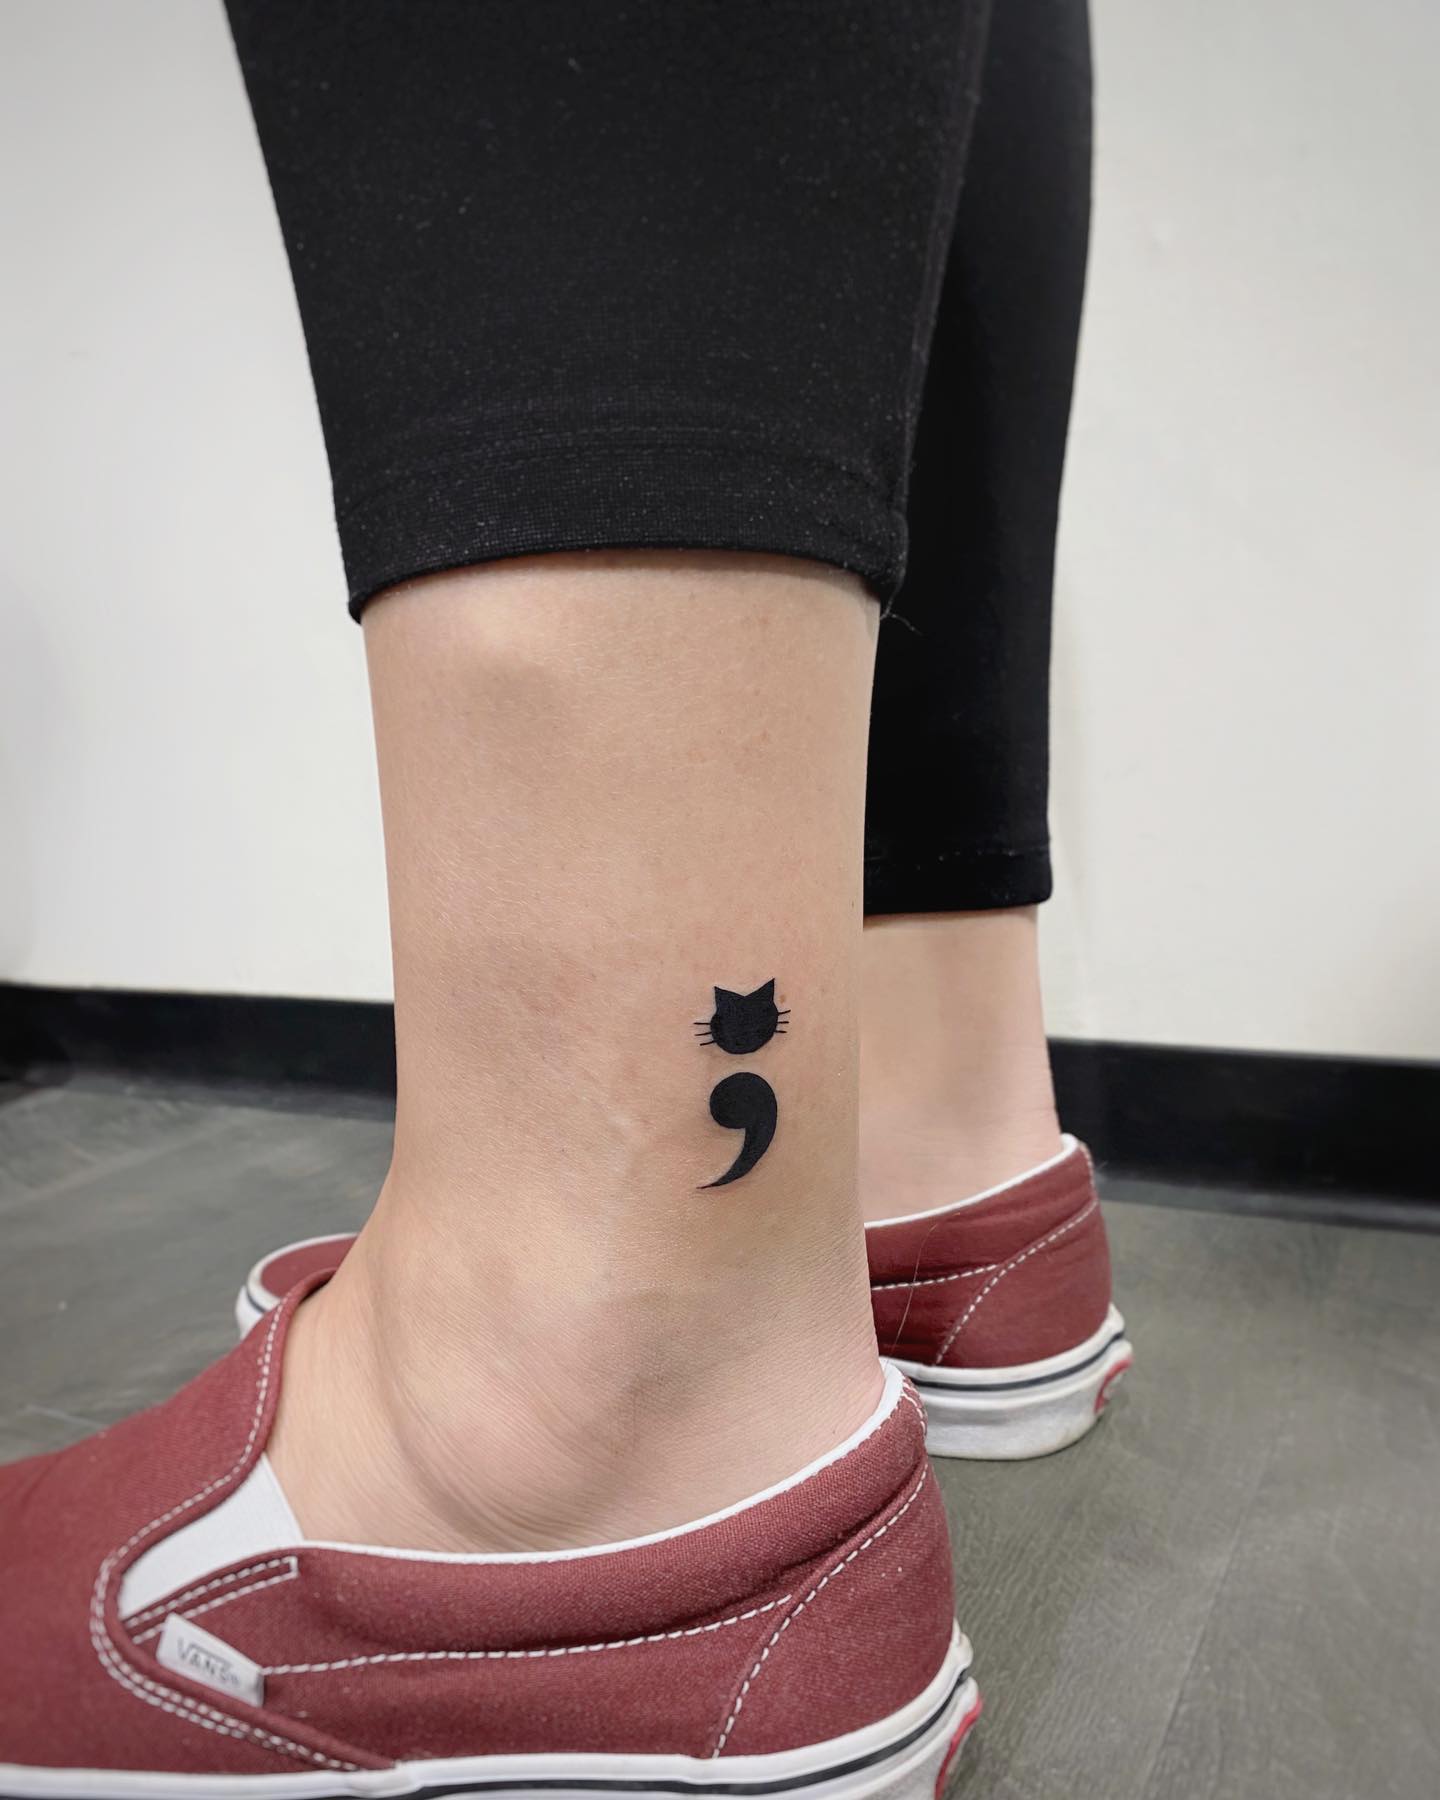 Black Cat Semicolon Tattoo on Ankle